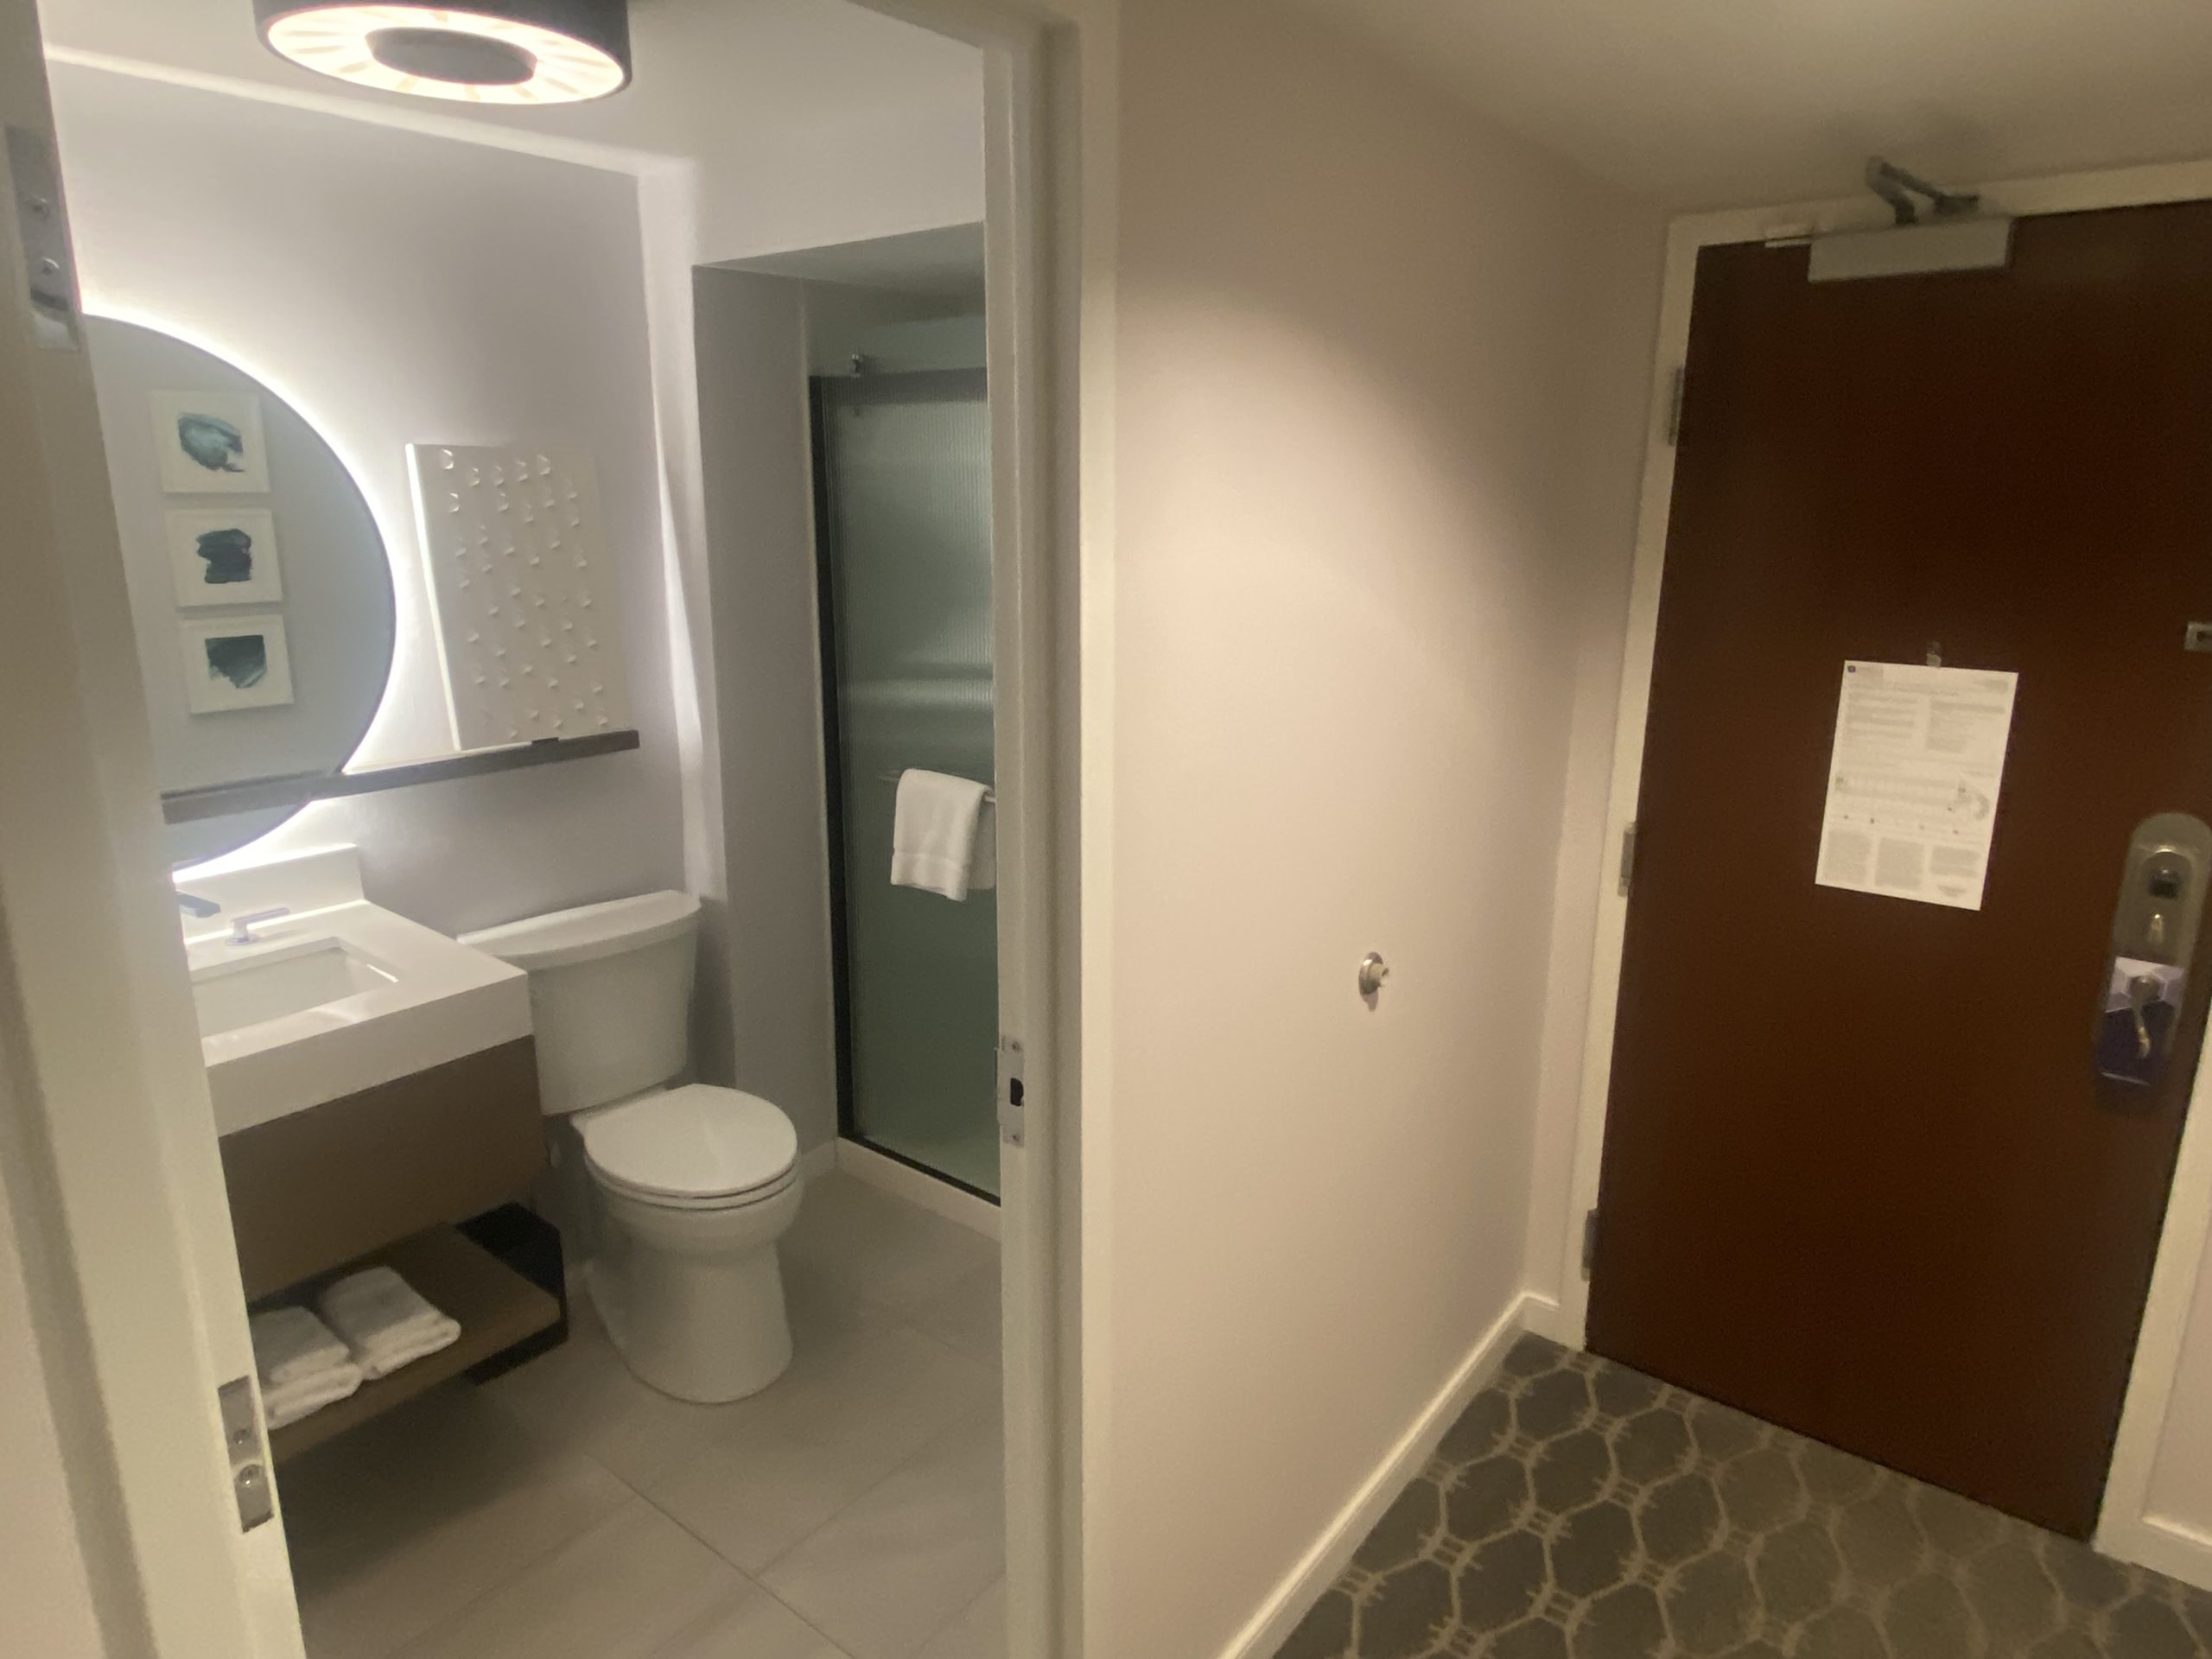 a bathroom with a door and a mirror